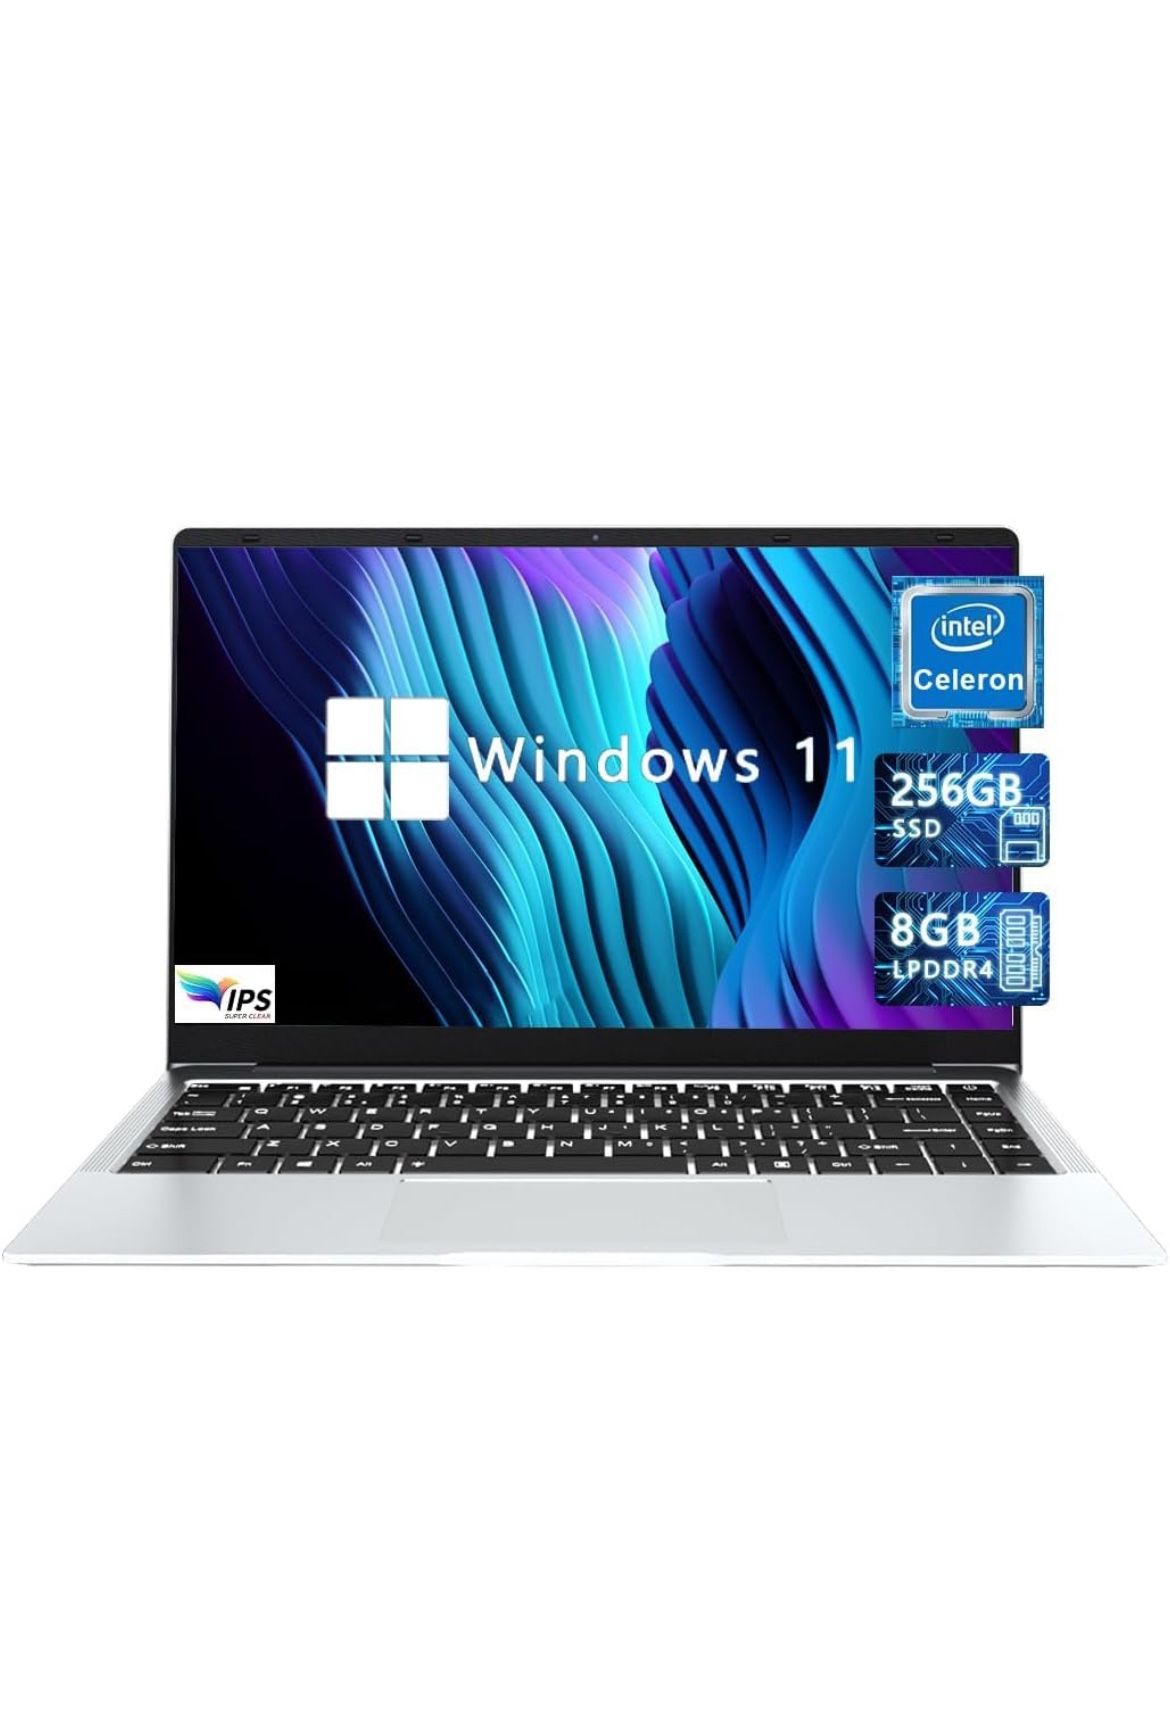 Laptop Computer,8G RAM 256GB SSD Laptop, Windows 11 Laptop, Intel Celeron Quad Core (Up to 2.7GHz) CPU, 14.1" FHD IPS, Webcam, 2.4G+5G WiFi, BT 5.0, M